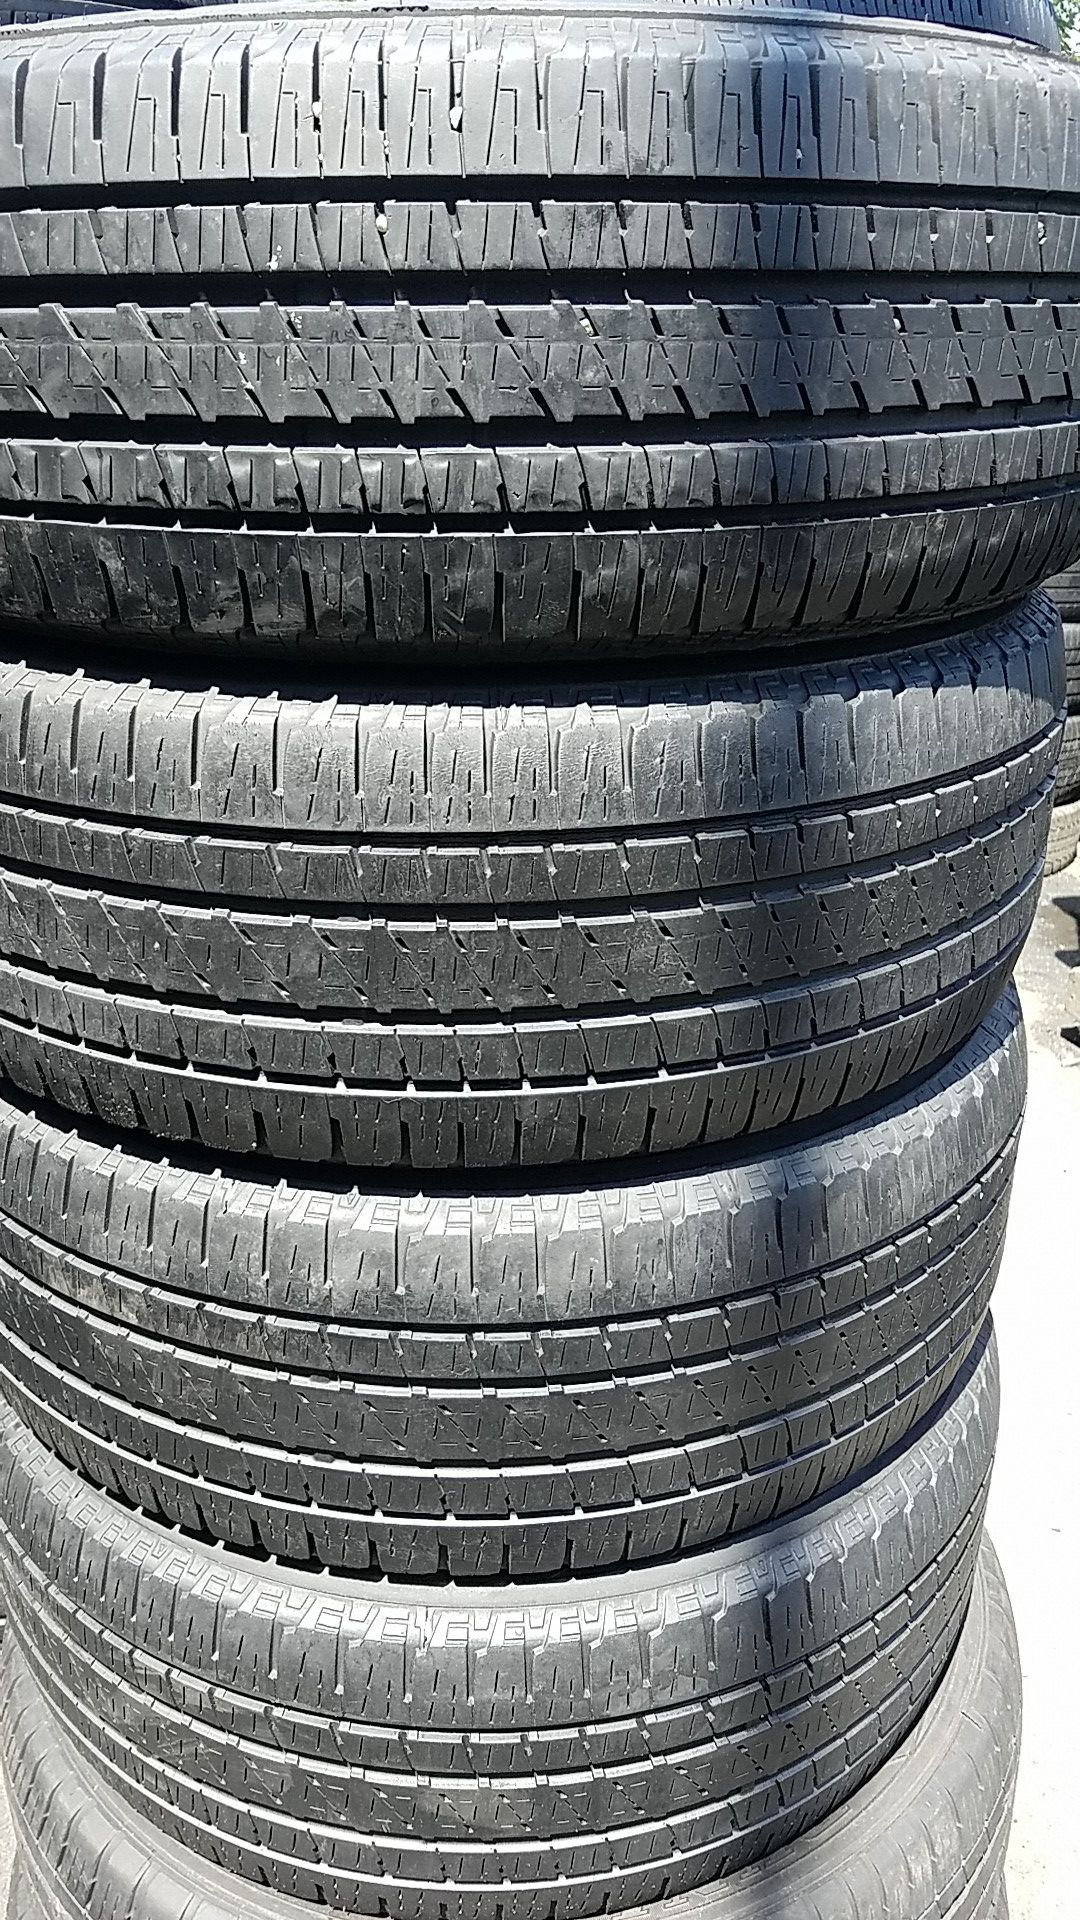 4 set of Bridgestone tires for sale 235/55/18